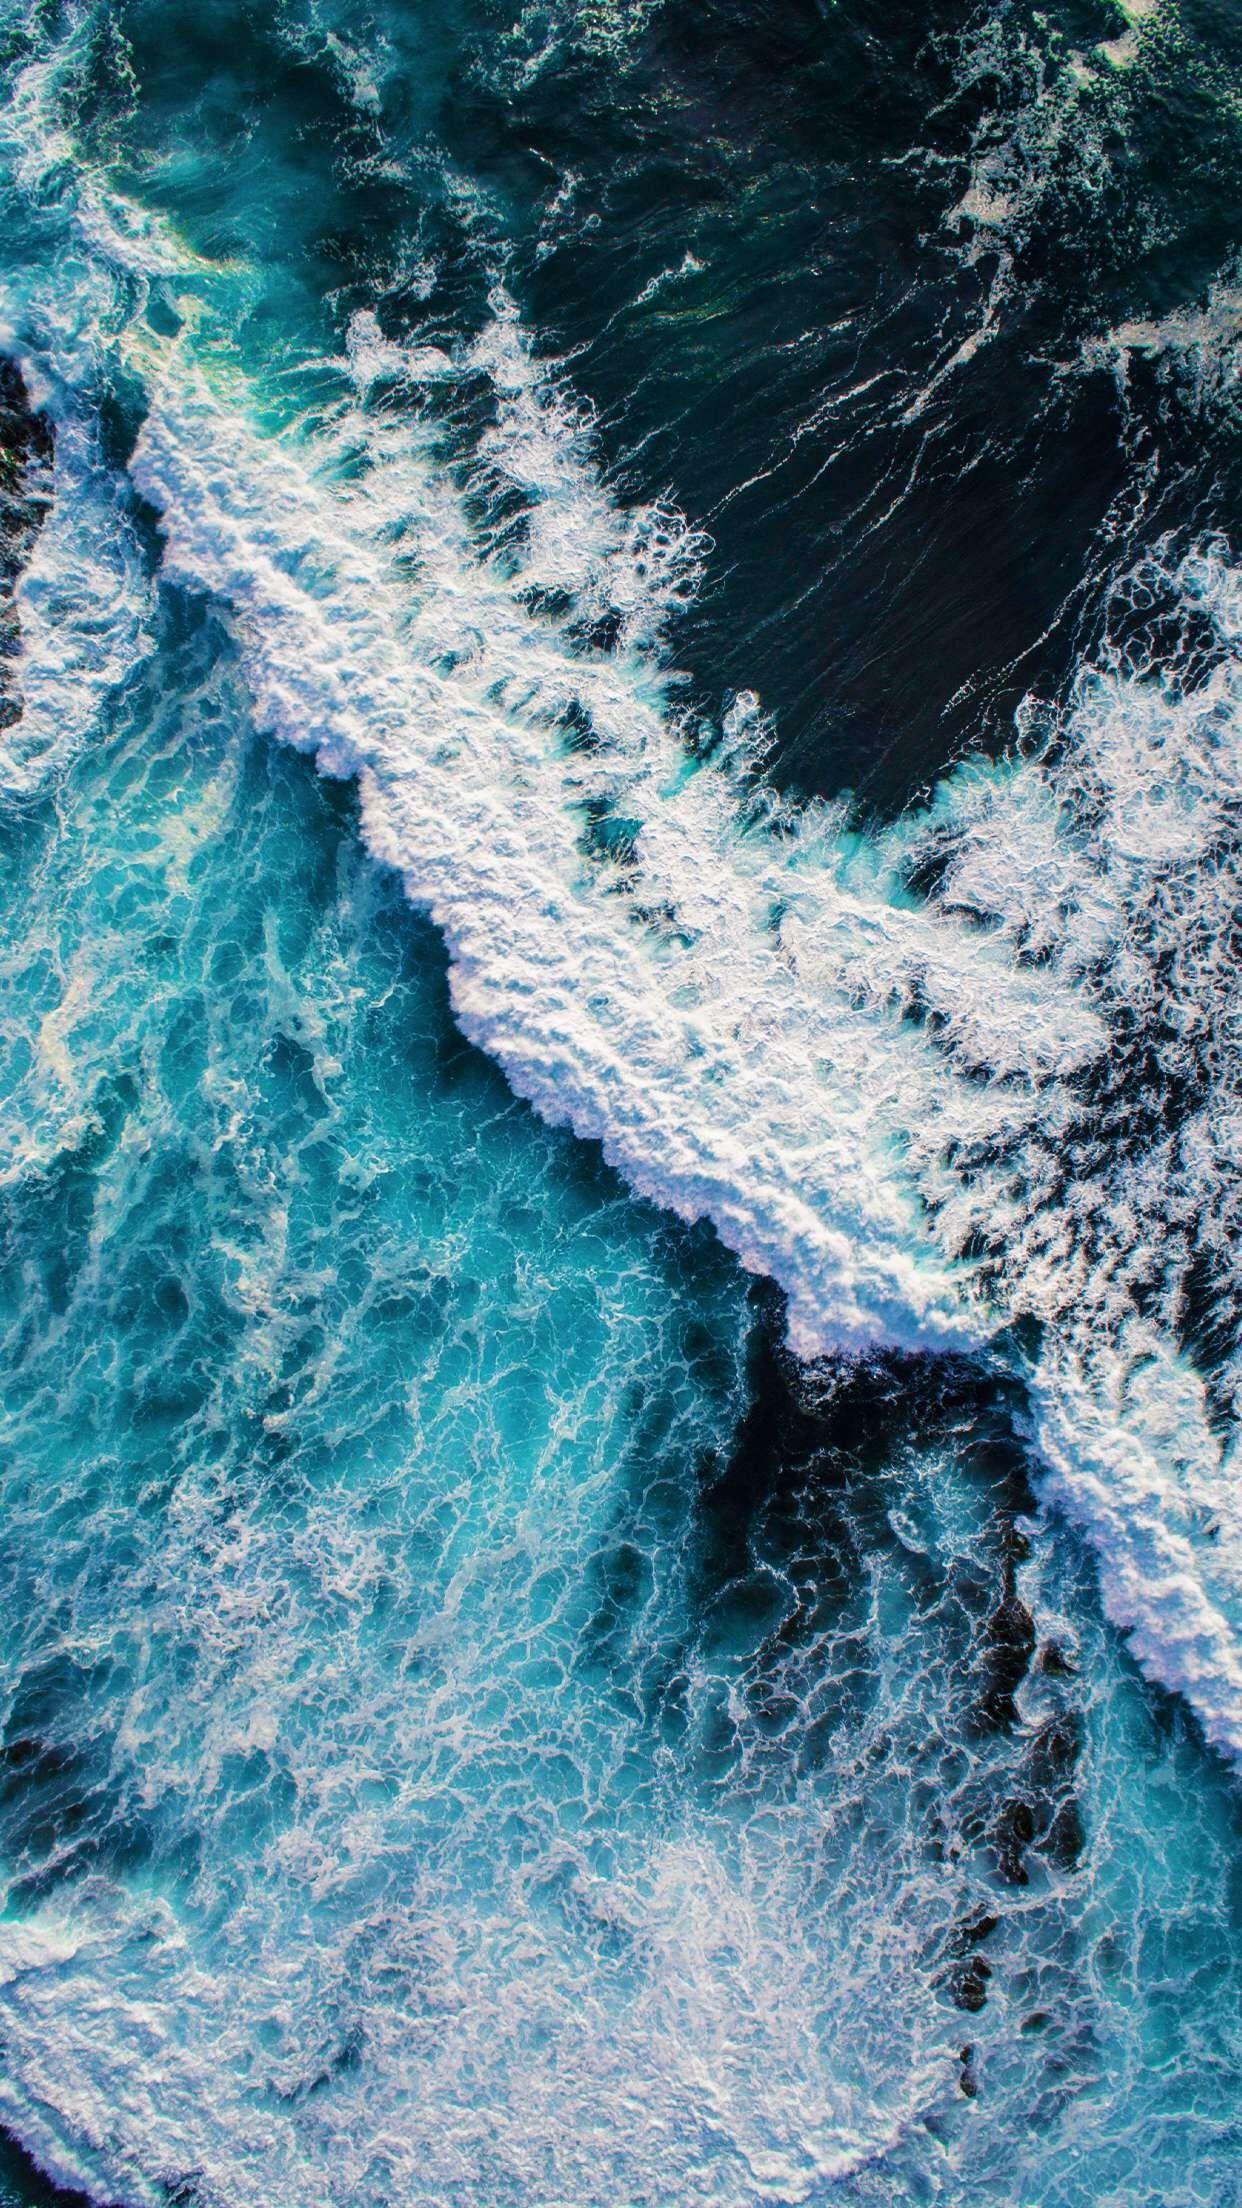 Breathtaking. Ocean wallpaper, Ocean photography